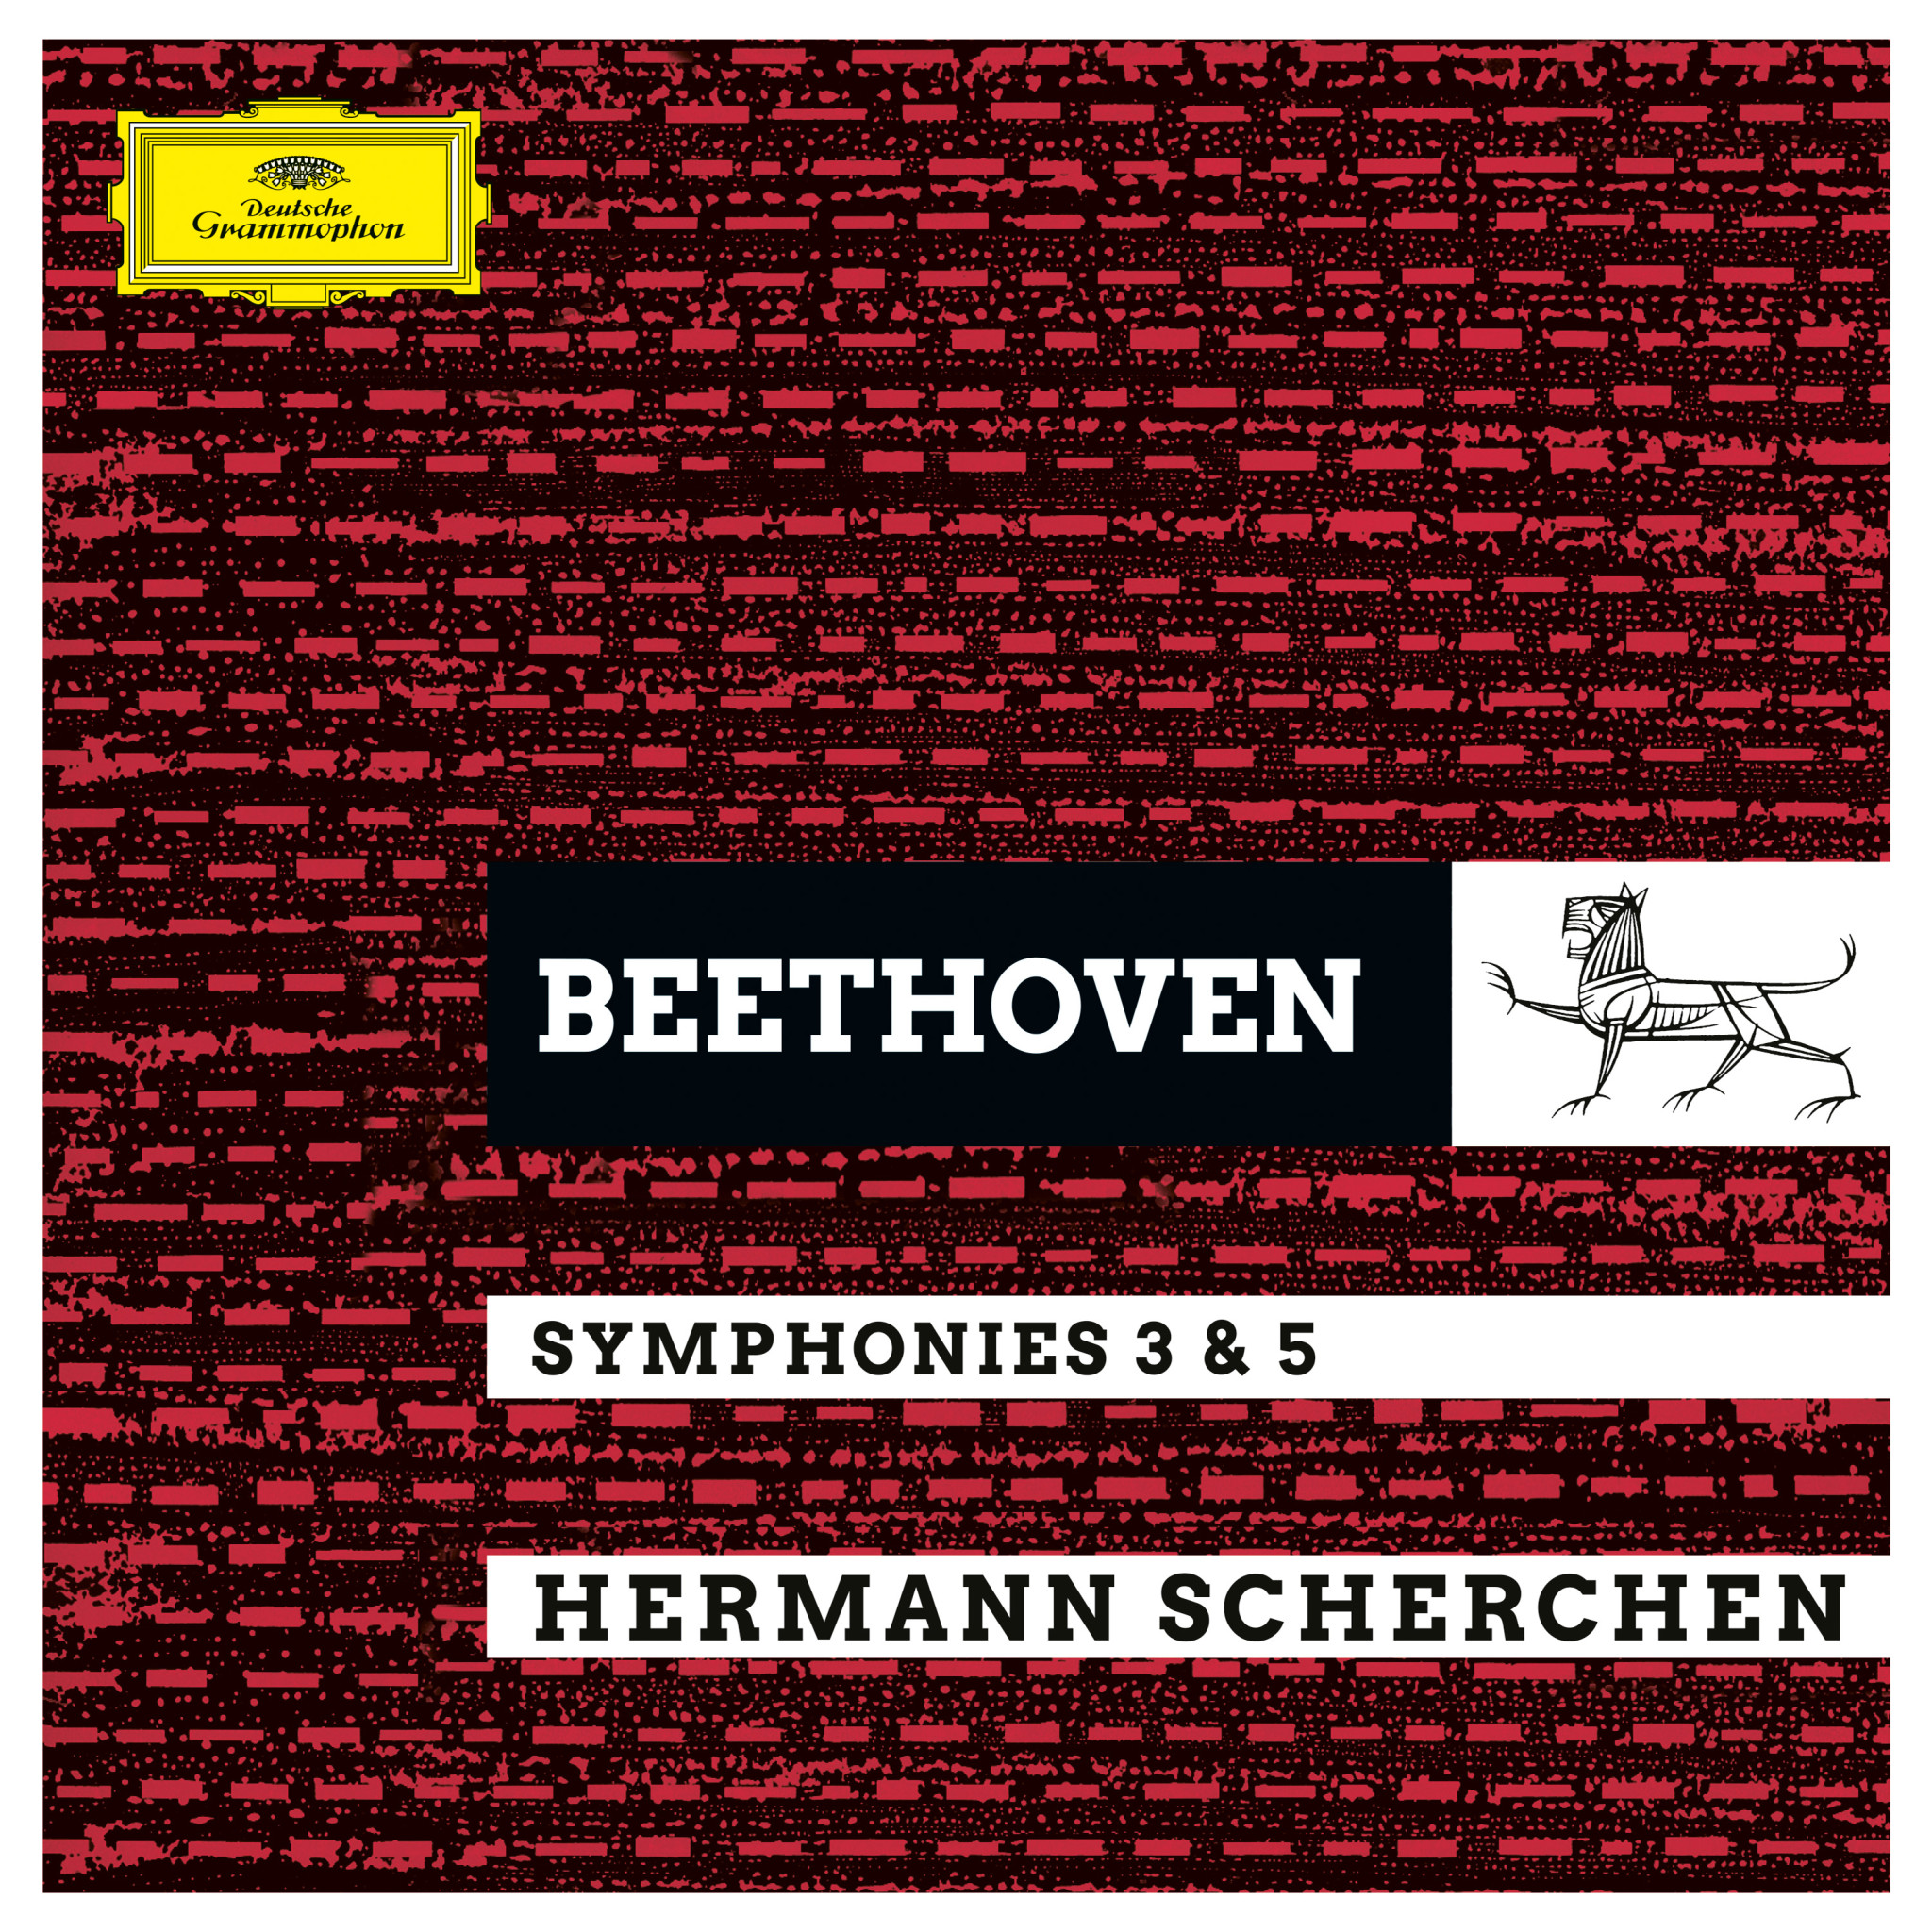 Beethoven: Symphonies 3 & 5 Hermann Scherchen